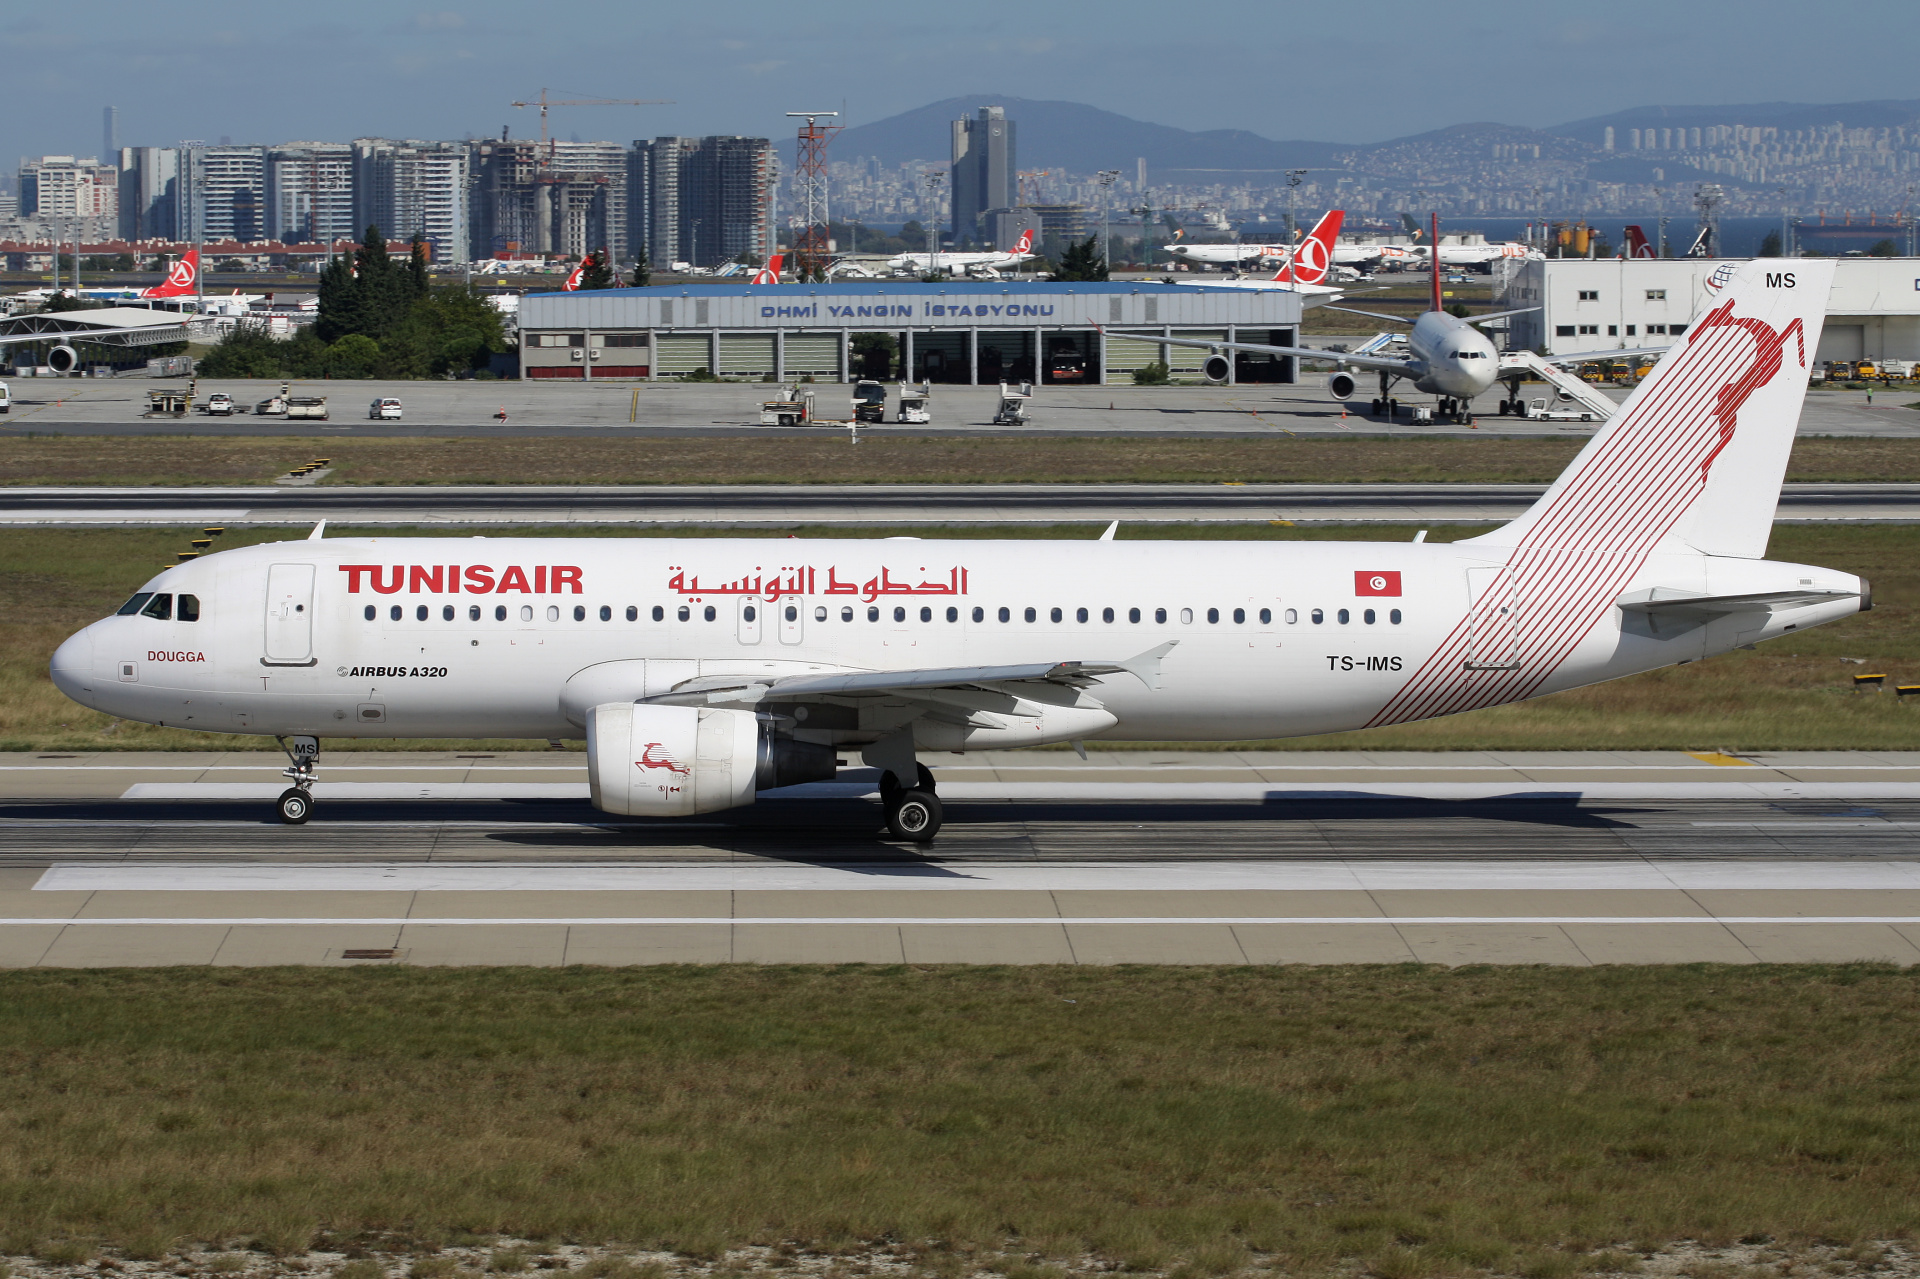 TS-IMS, Tunisair (Samoloty » Port Lotniczy im. Atatürka w Stambule » Airbus A320-200)